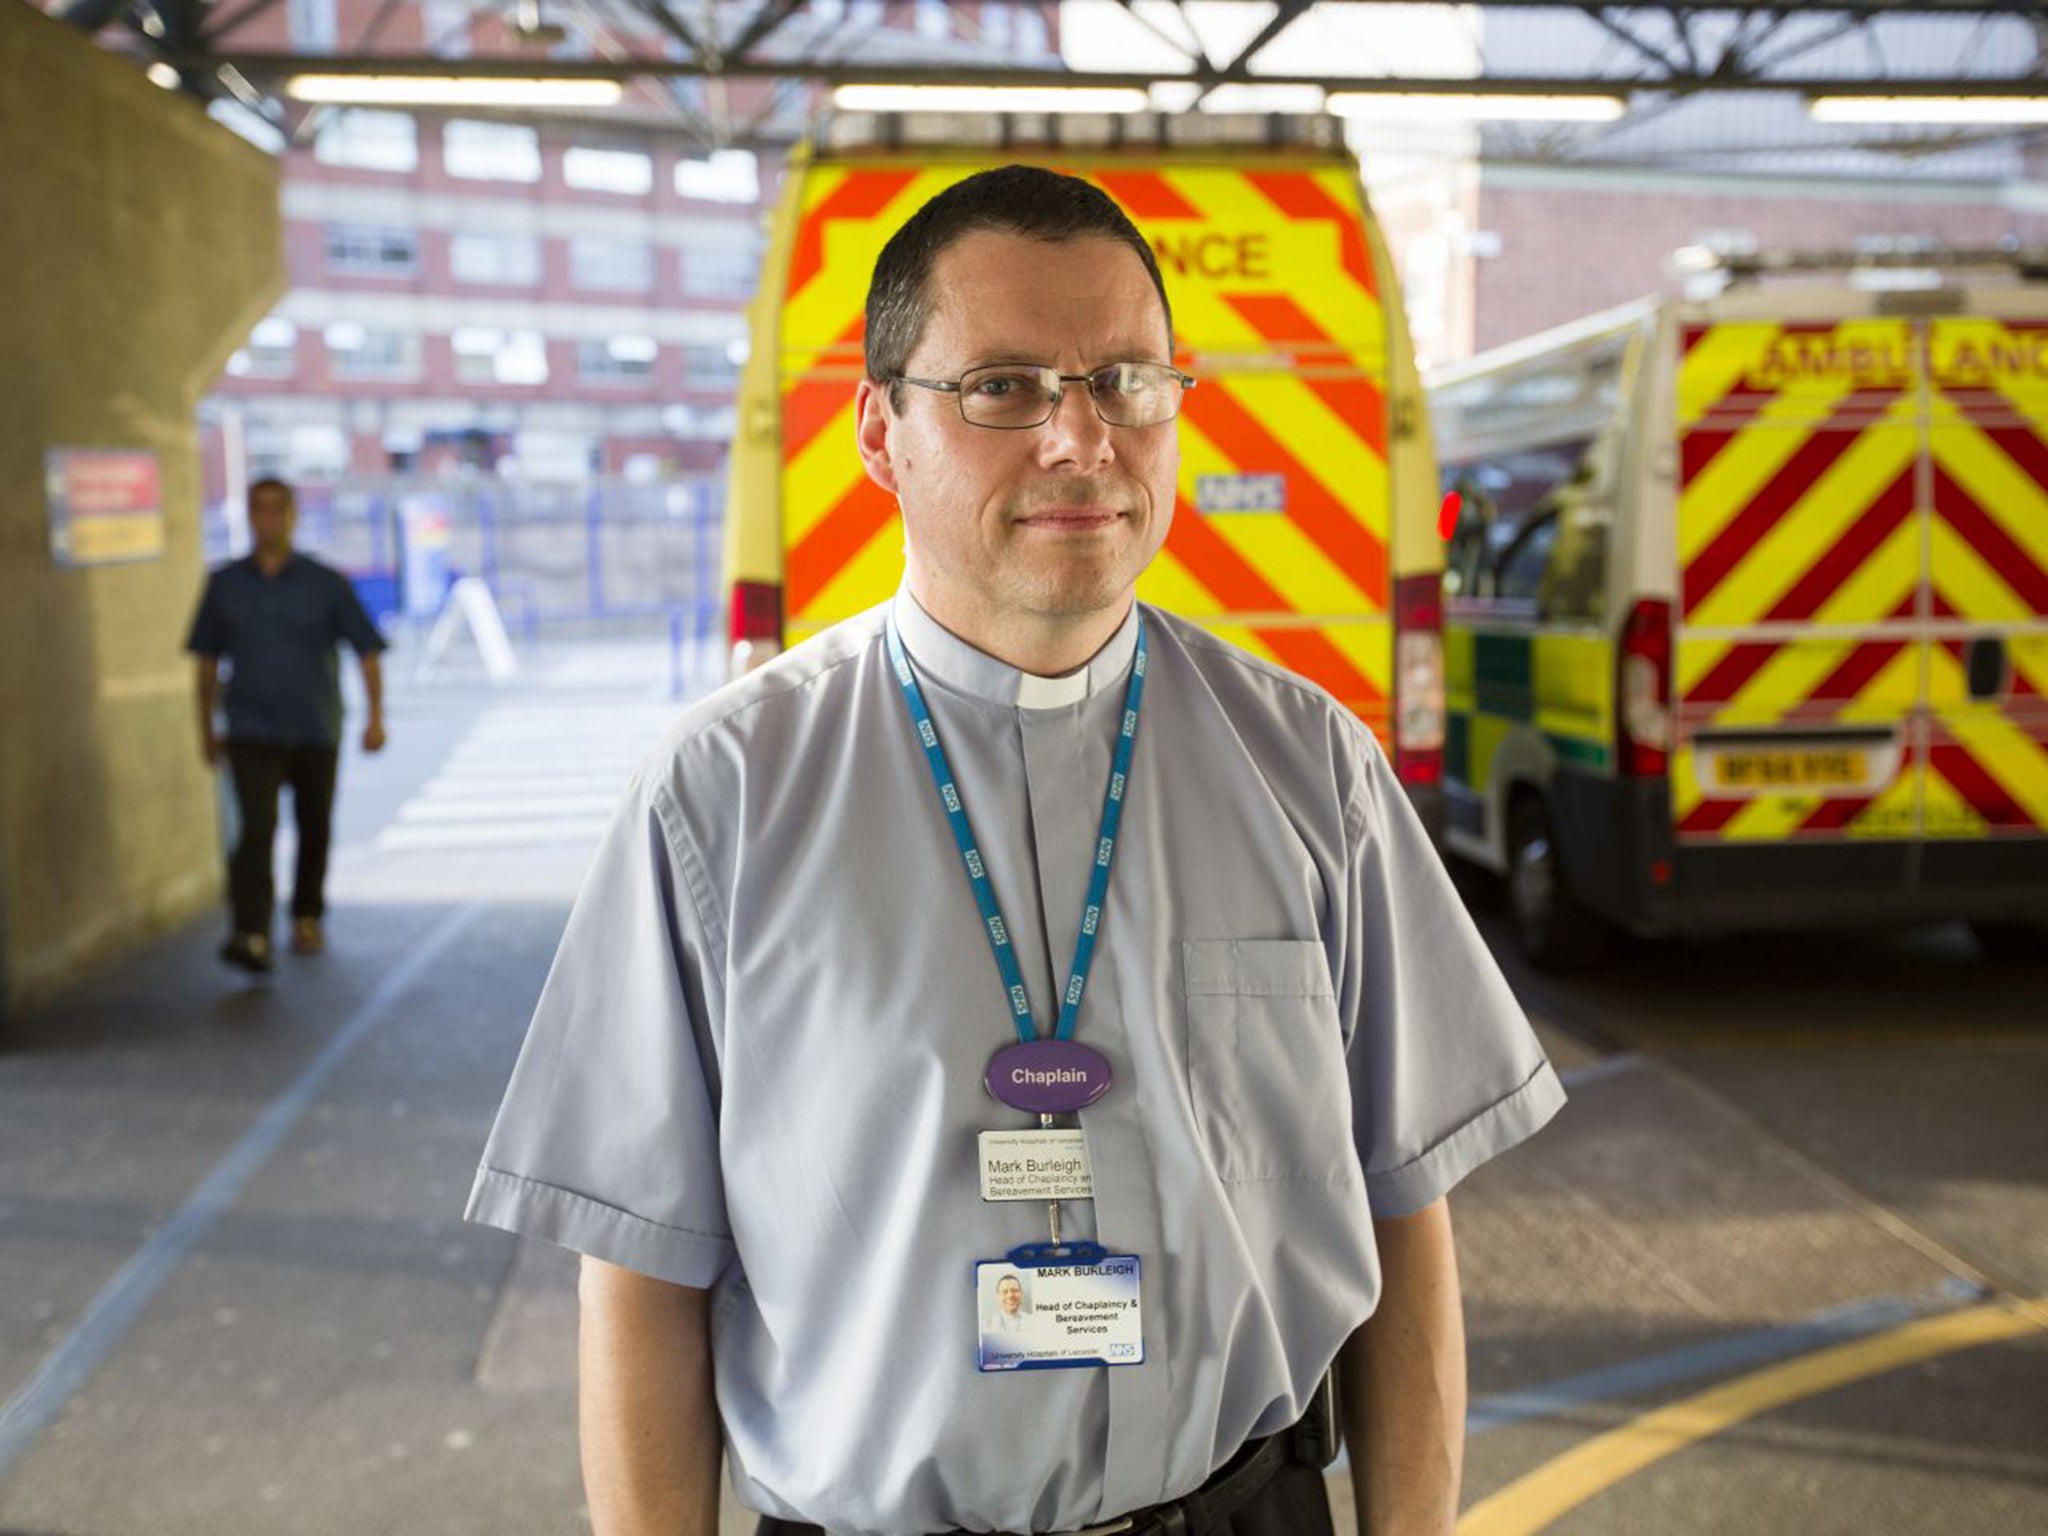 Mark Burleigh, Head of Chaplaincy at Leicester General Hospital